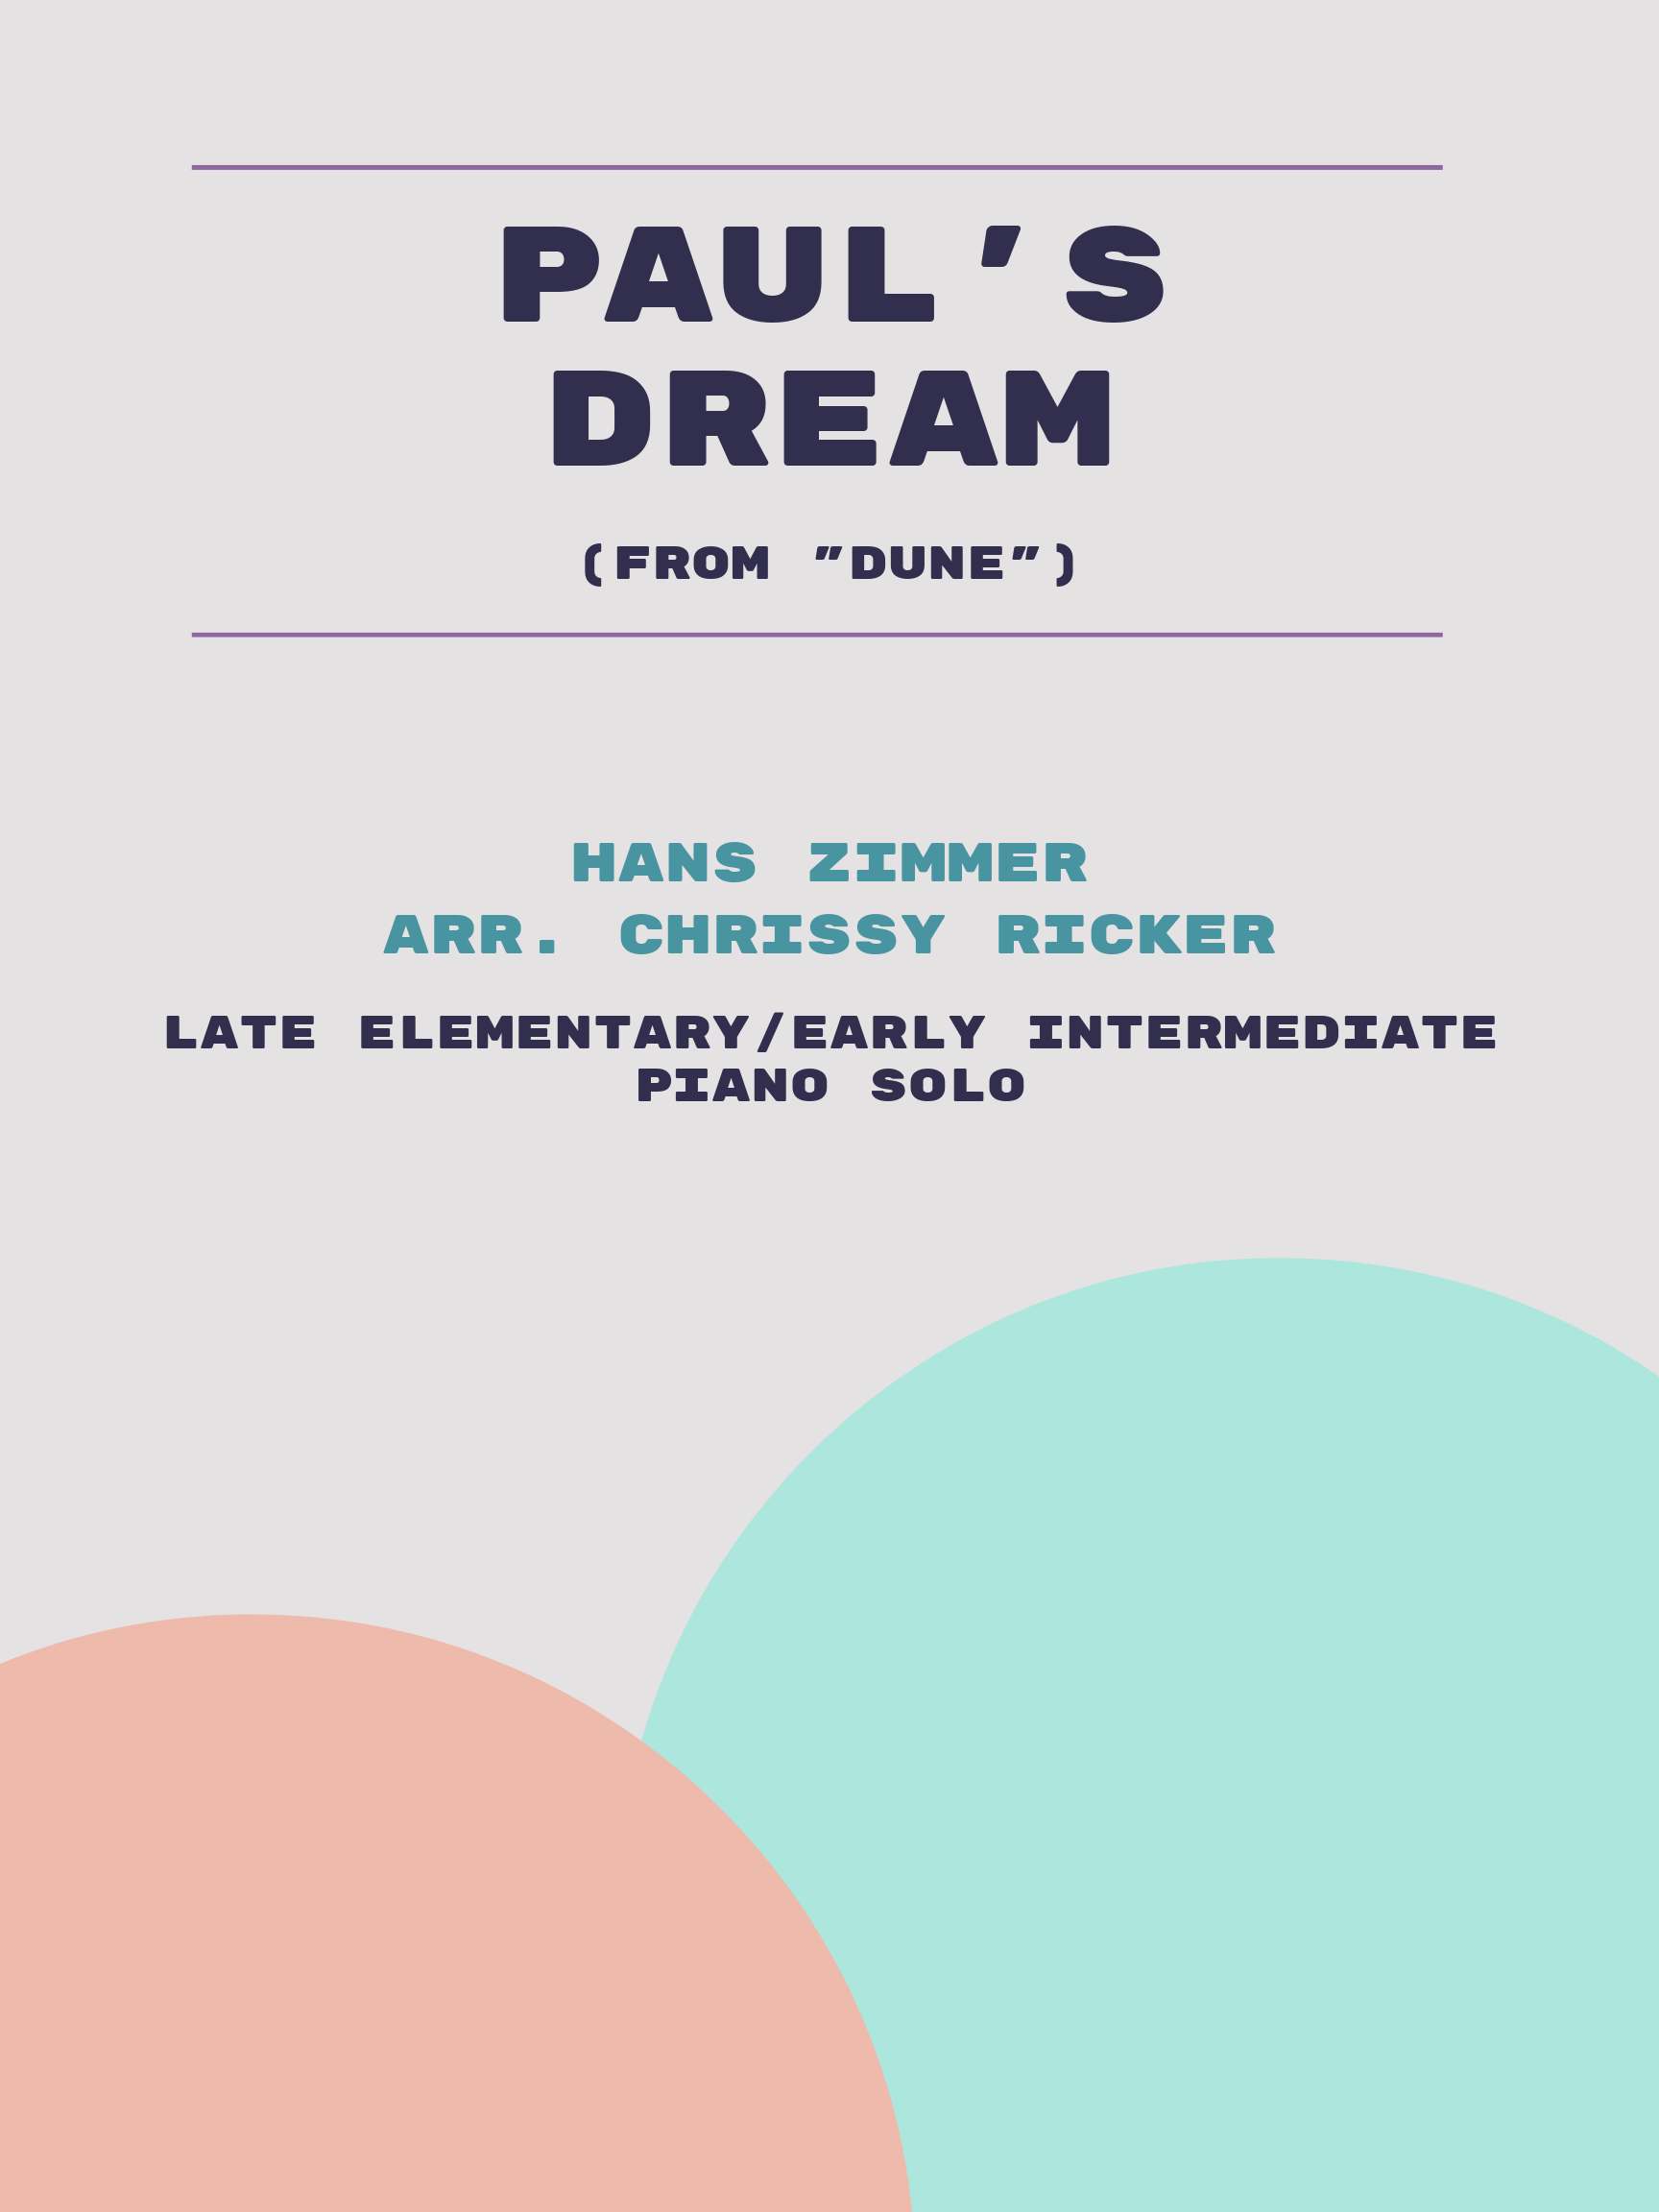 Paul's Dream by Hans Zimmer